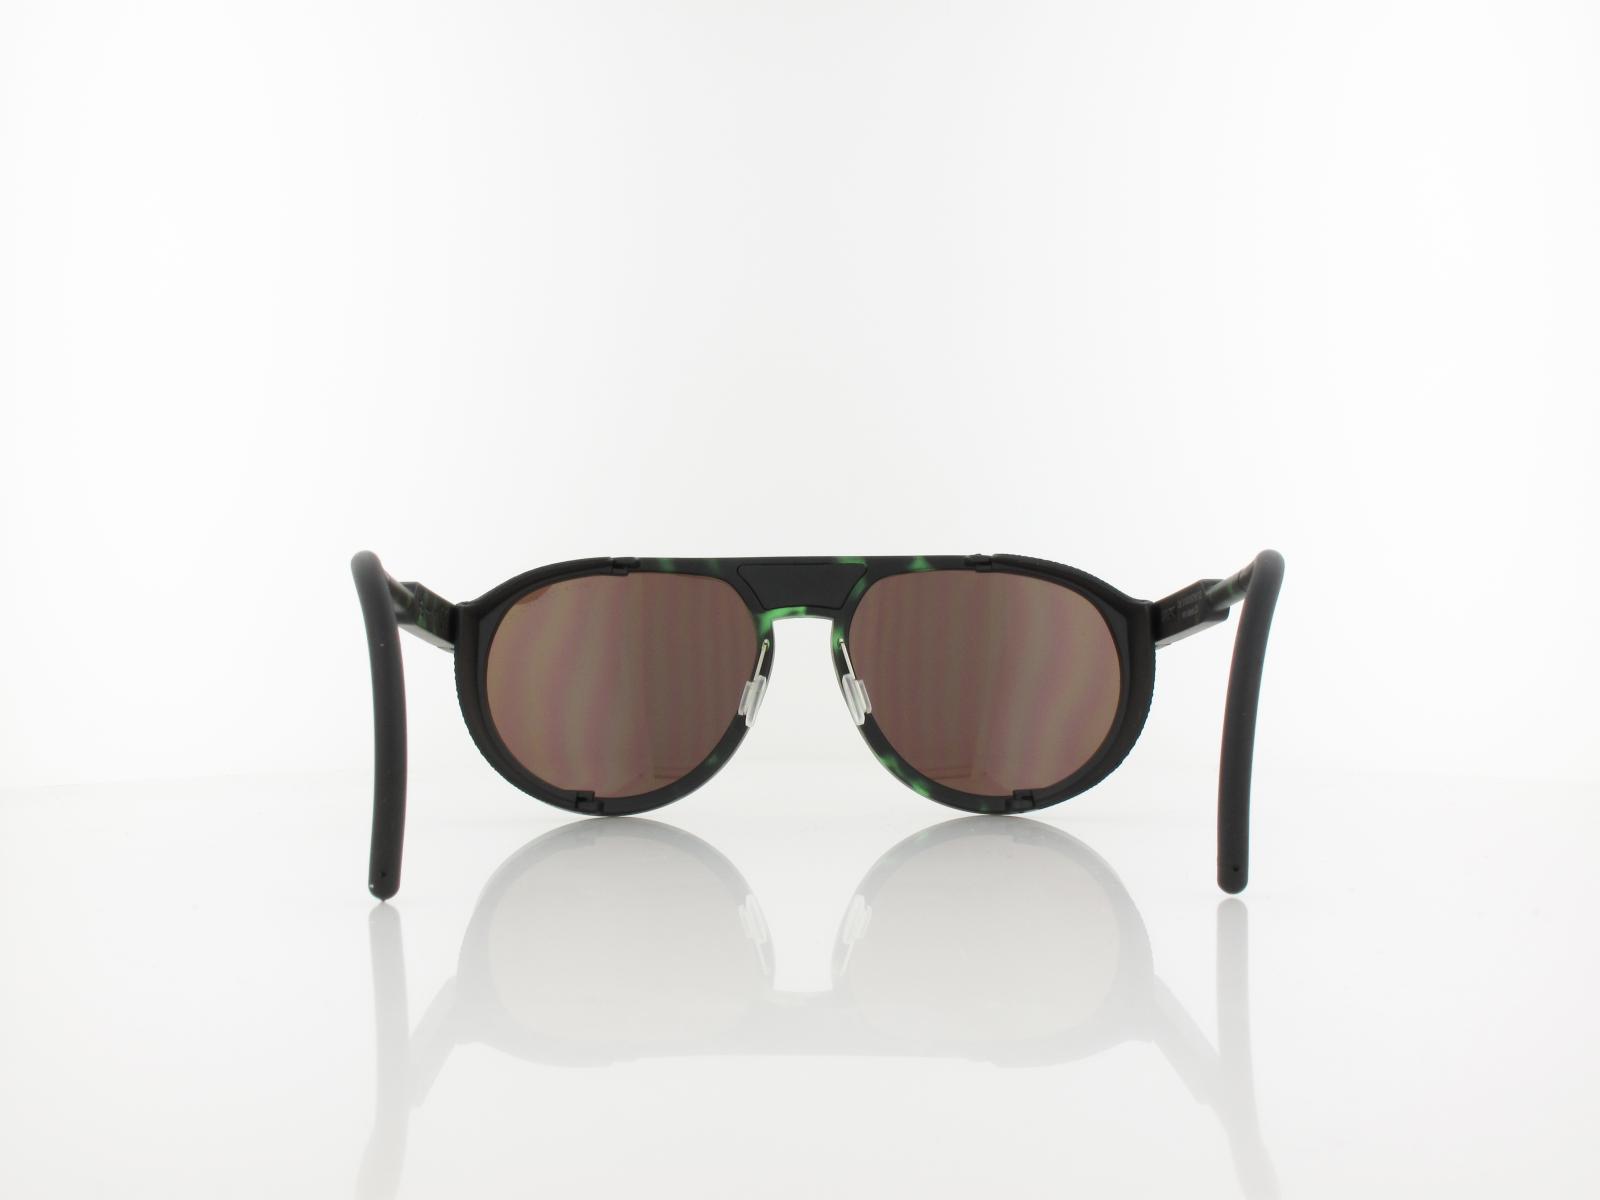 UVEX | mtn classic CV S533034 7770 59 | green matt tortoise / colorvision mirror green